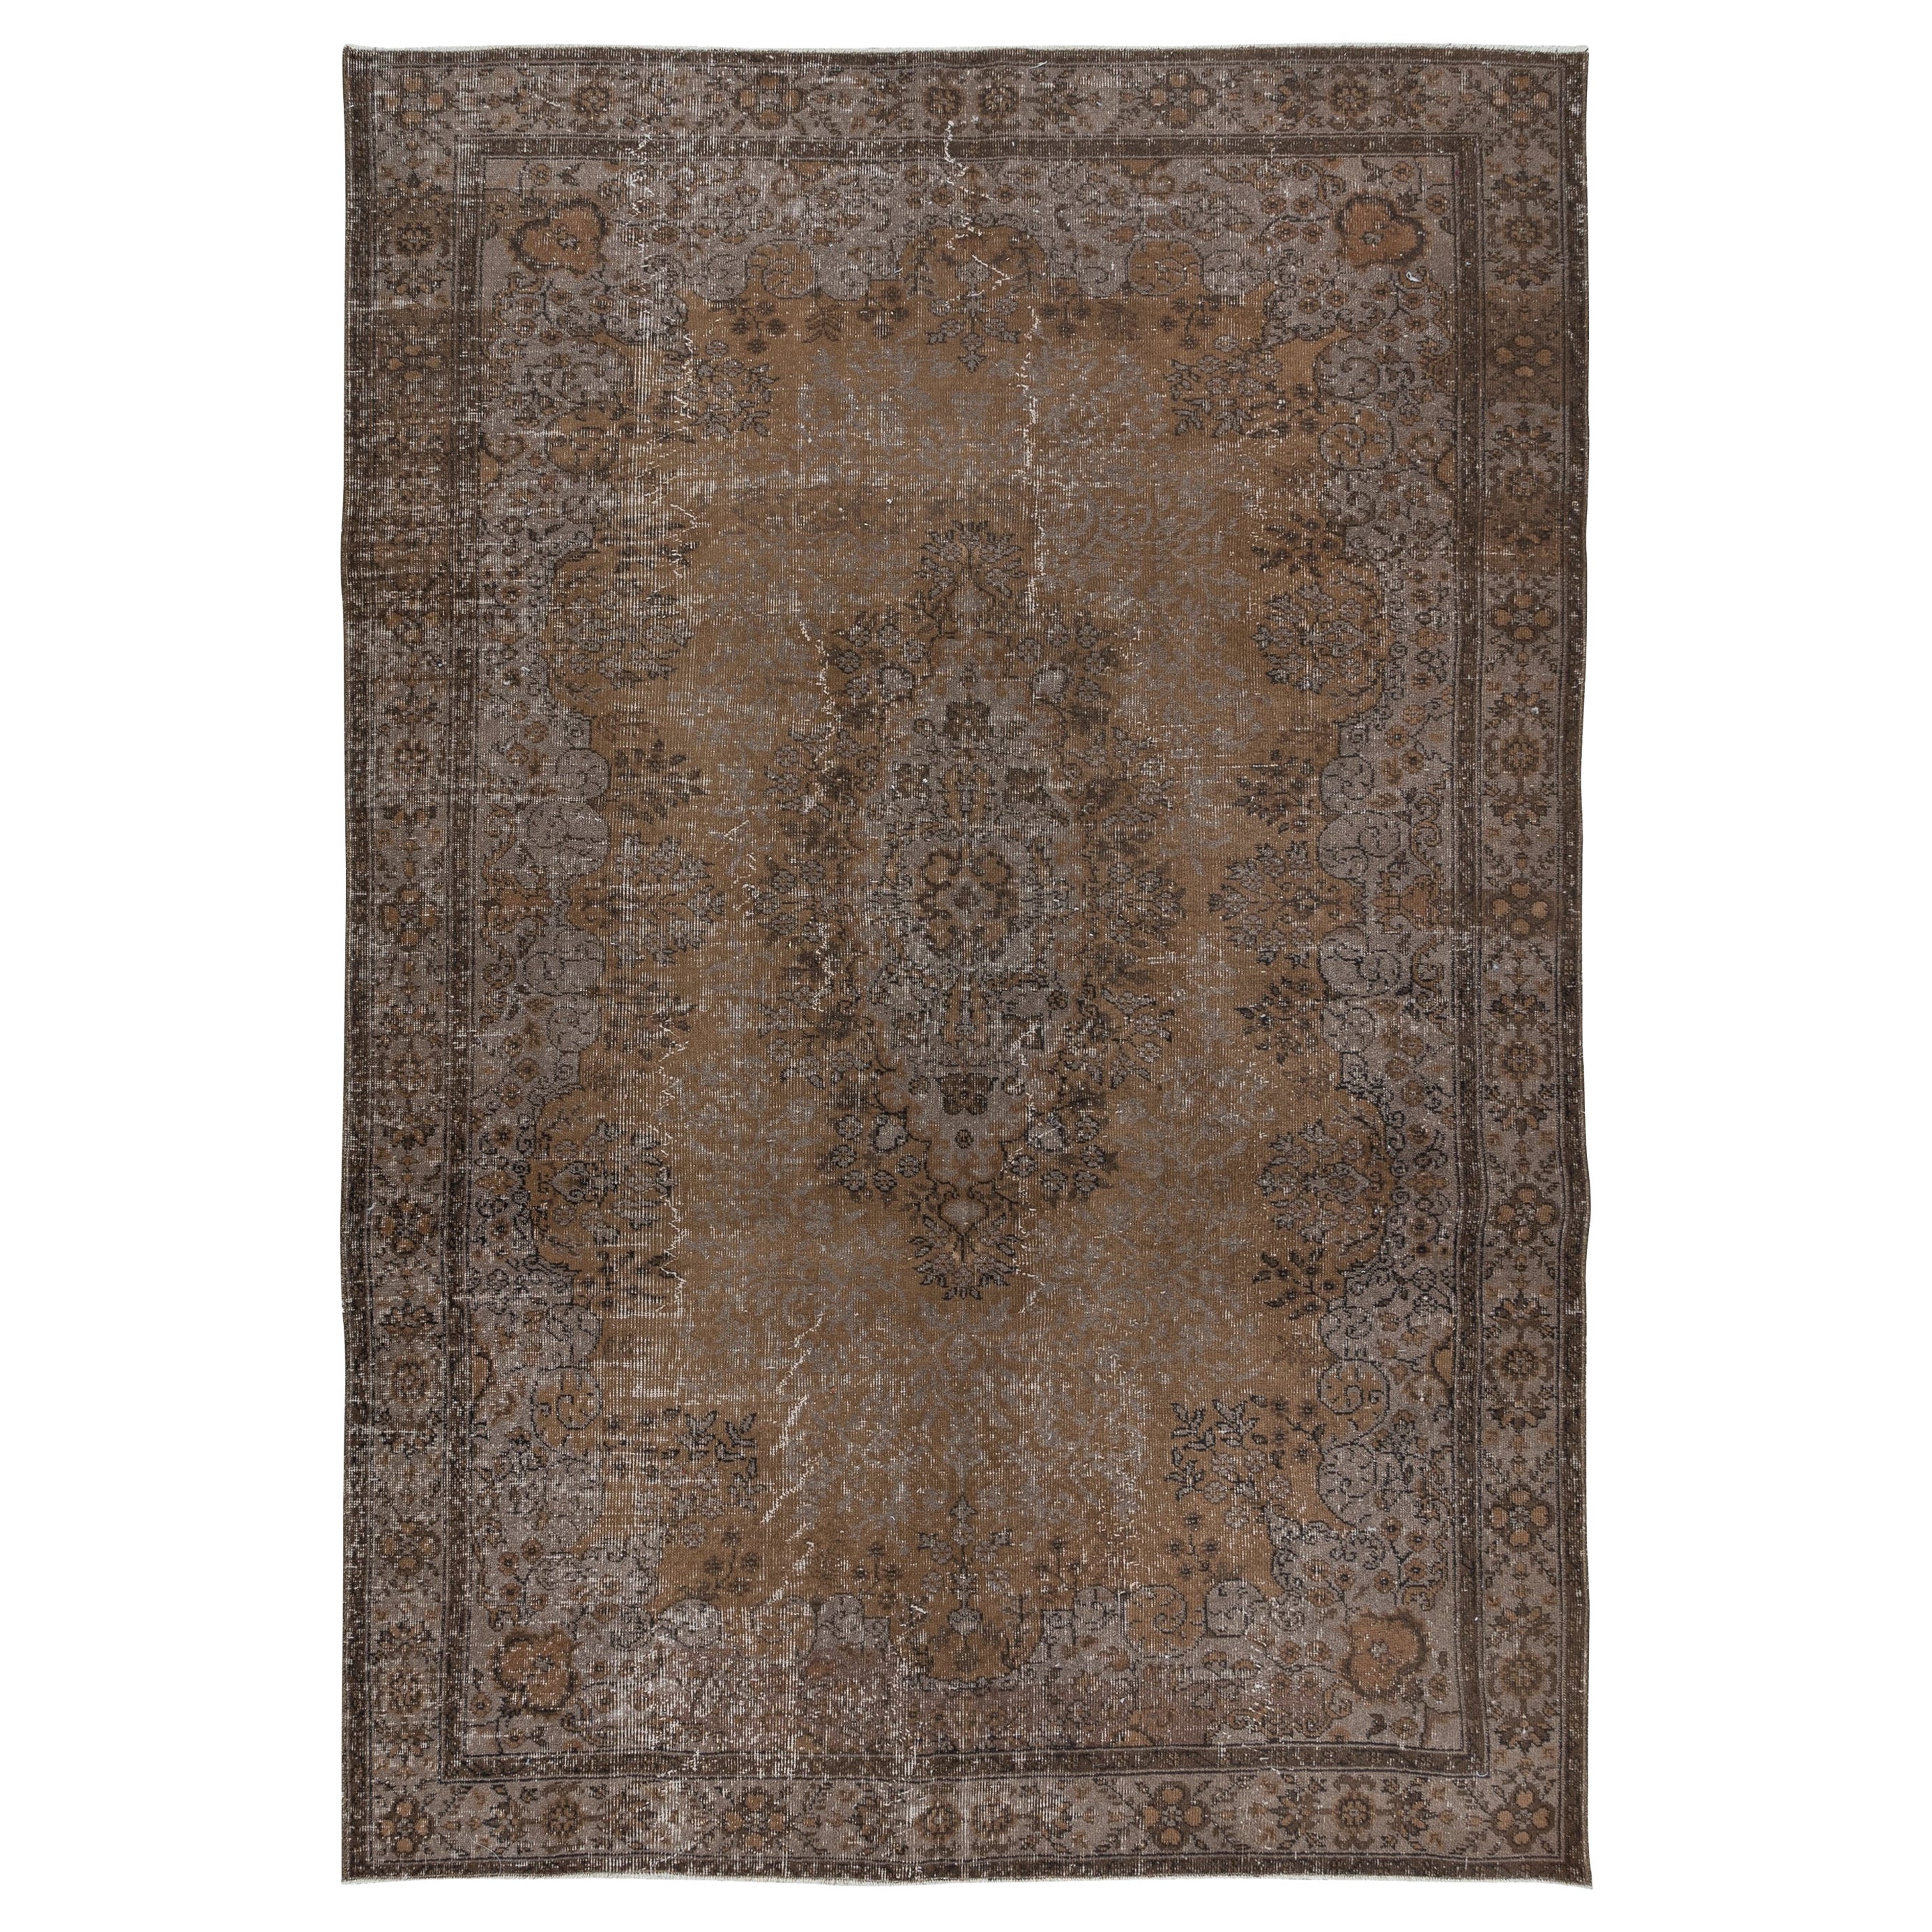 6.4x9.2 Ft Handknotted Living Room Carpet in Brown, Turkish Medallion Design Rug